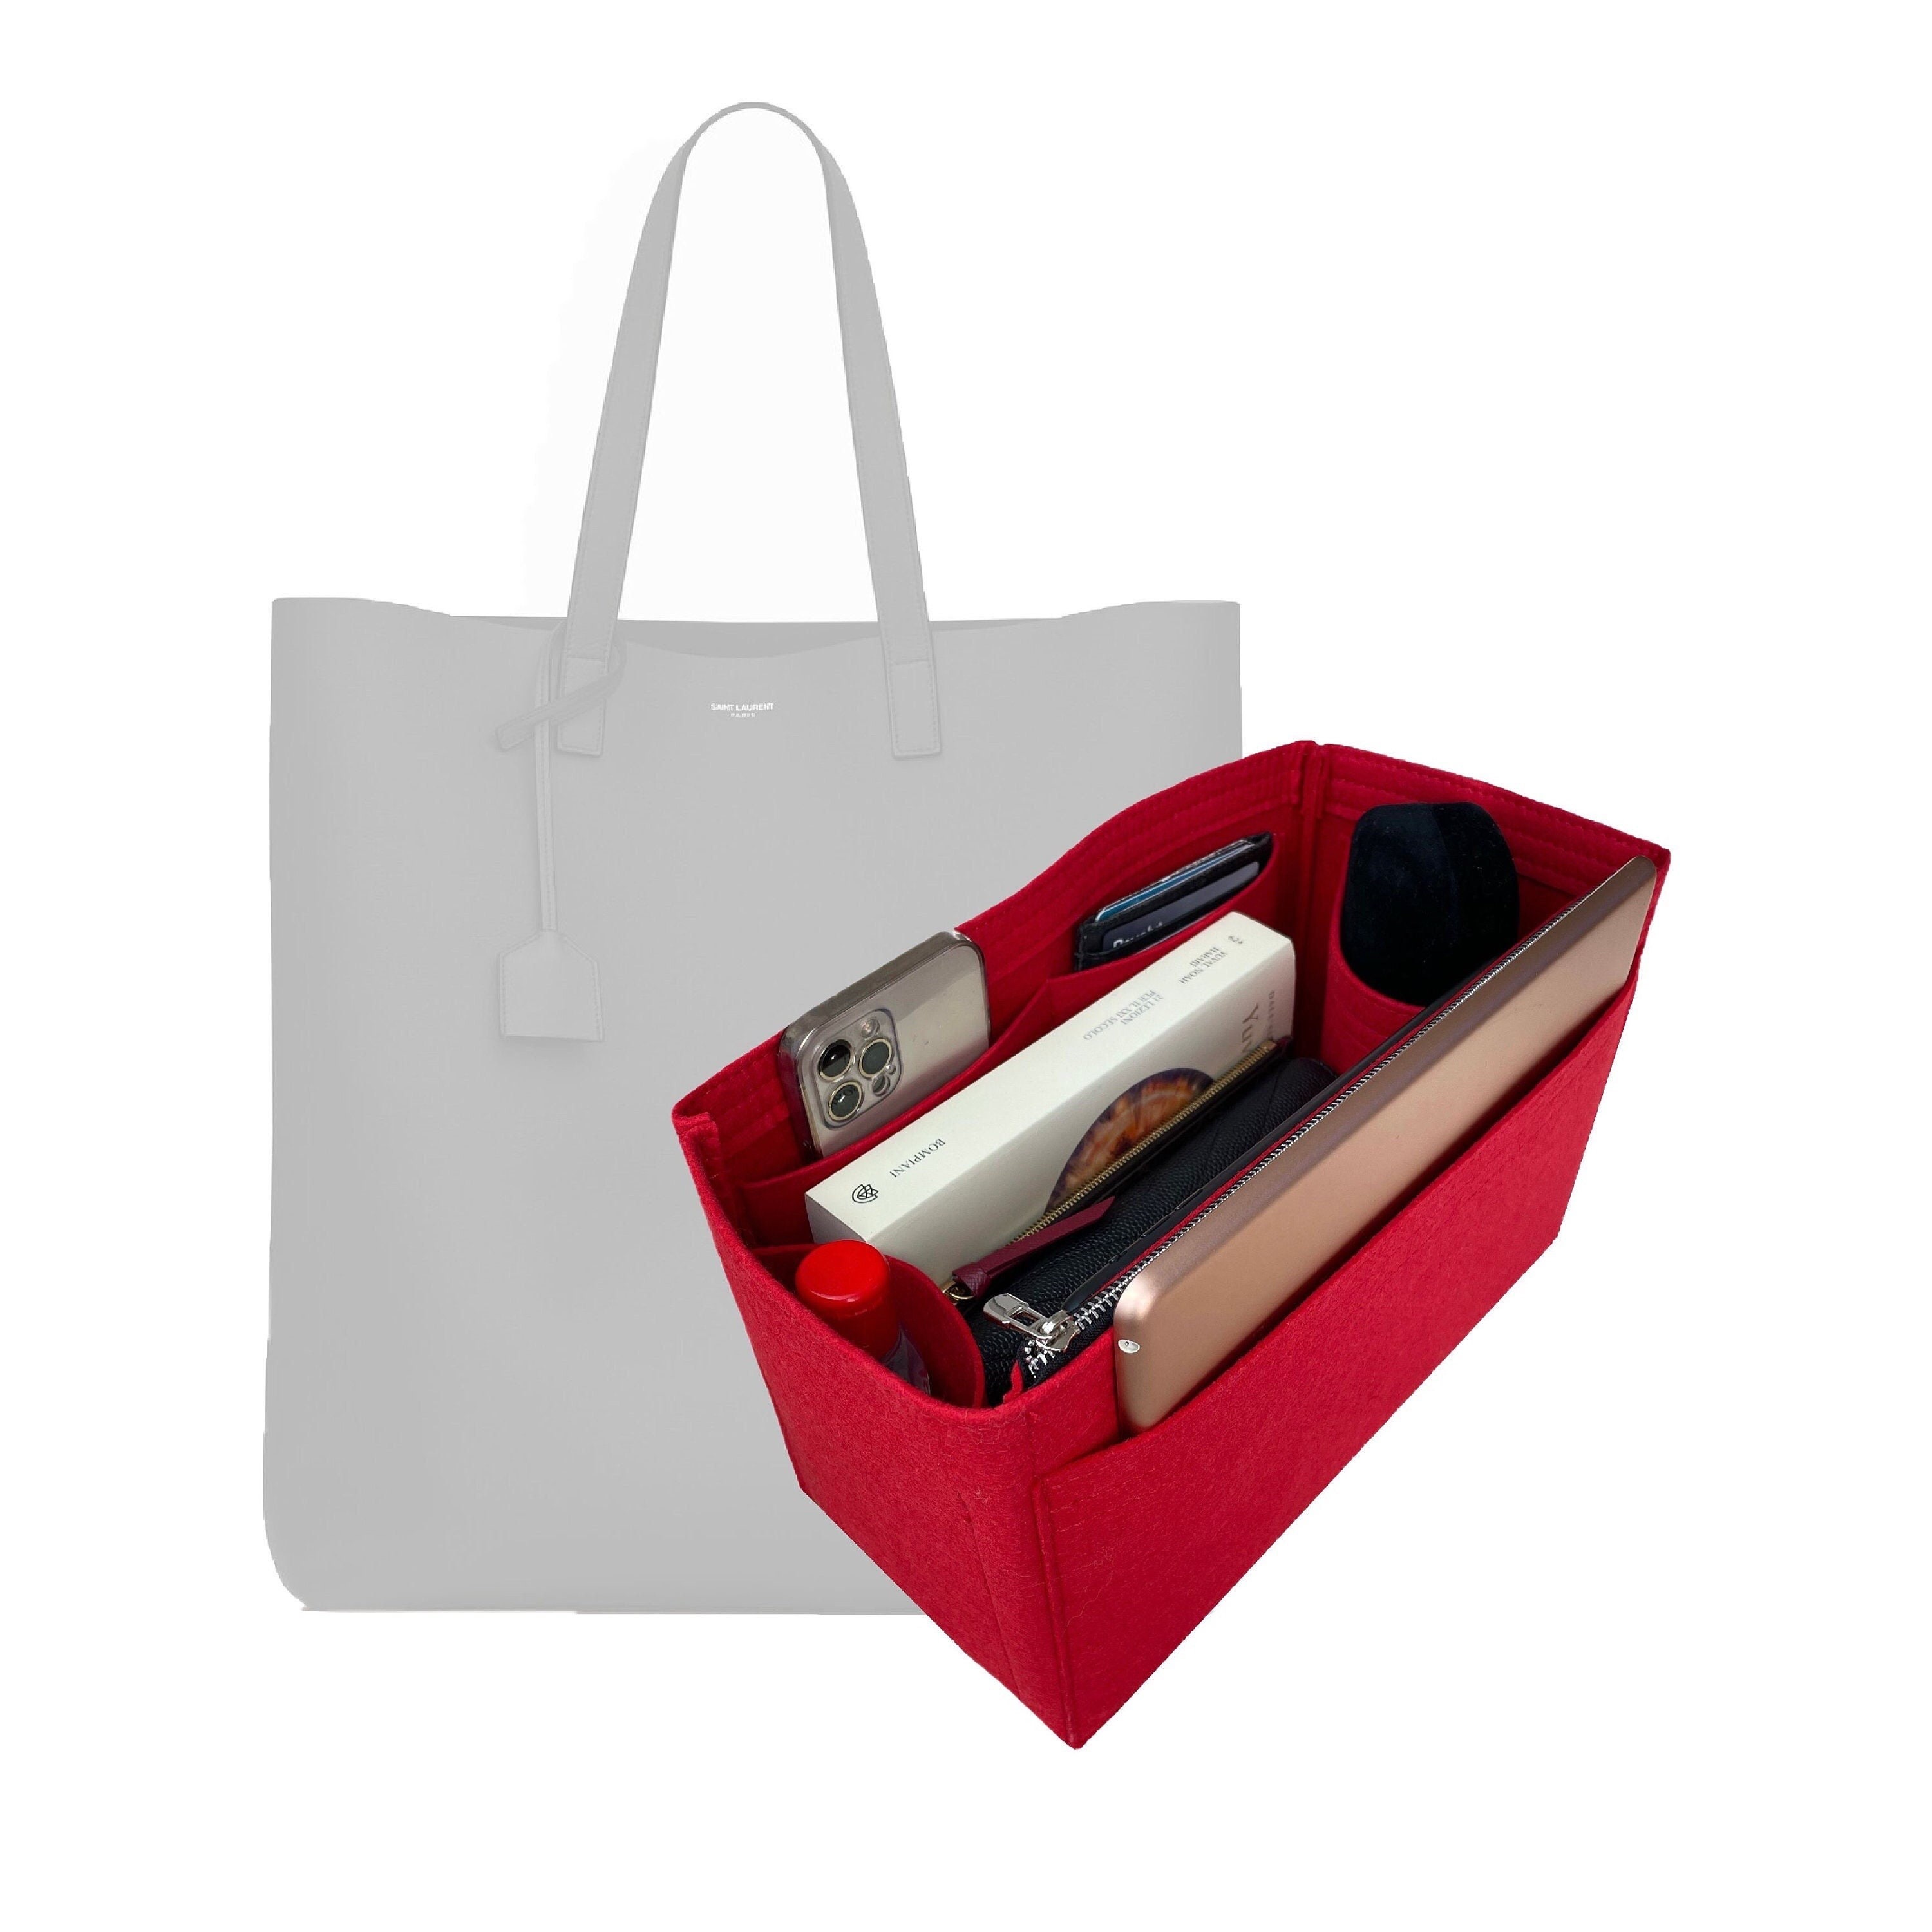  Purse Organizer for Chanel 19 Bag Organizer Medium, 19 Small Bag  Insert, 19 Bag Organizer Large, 19 Insert 2mm Customizable Premium Felt  Handmade (For Medium/Large 19 Flap, Scarlet) : Handmade Products